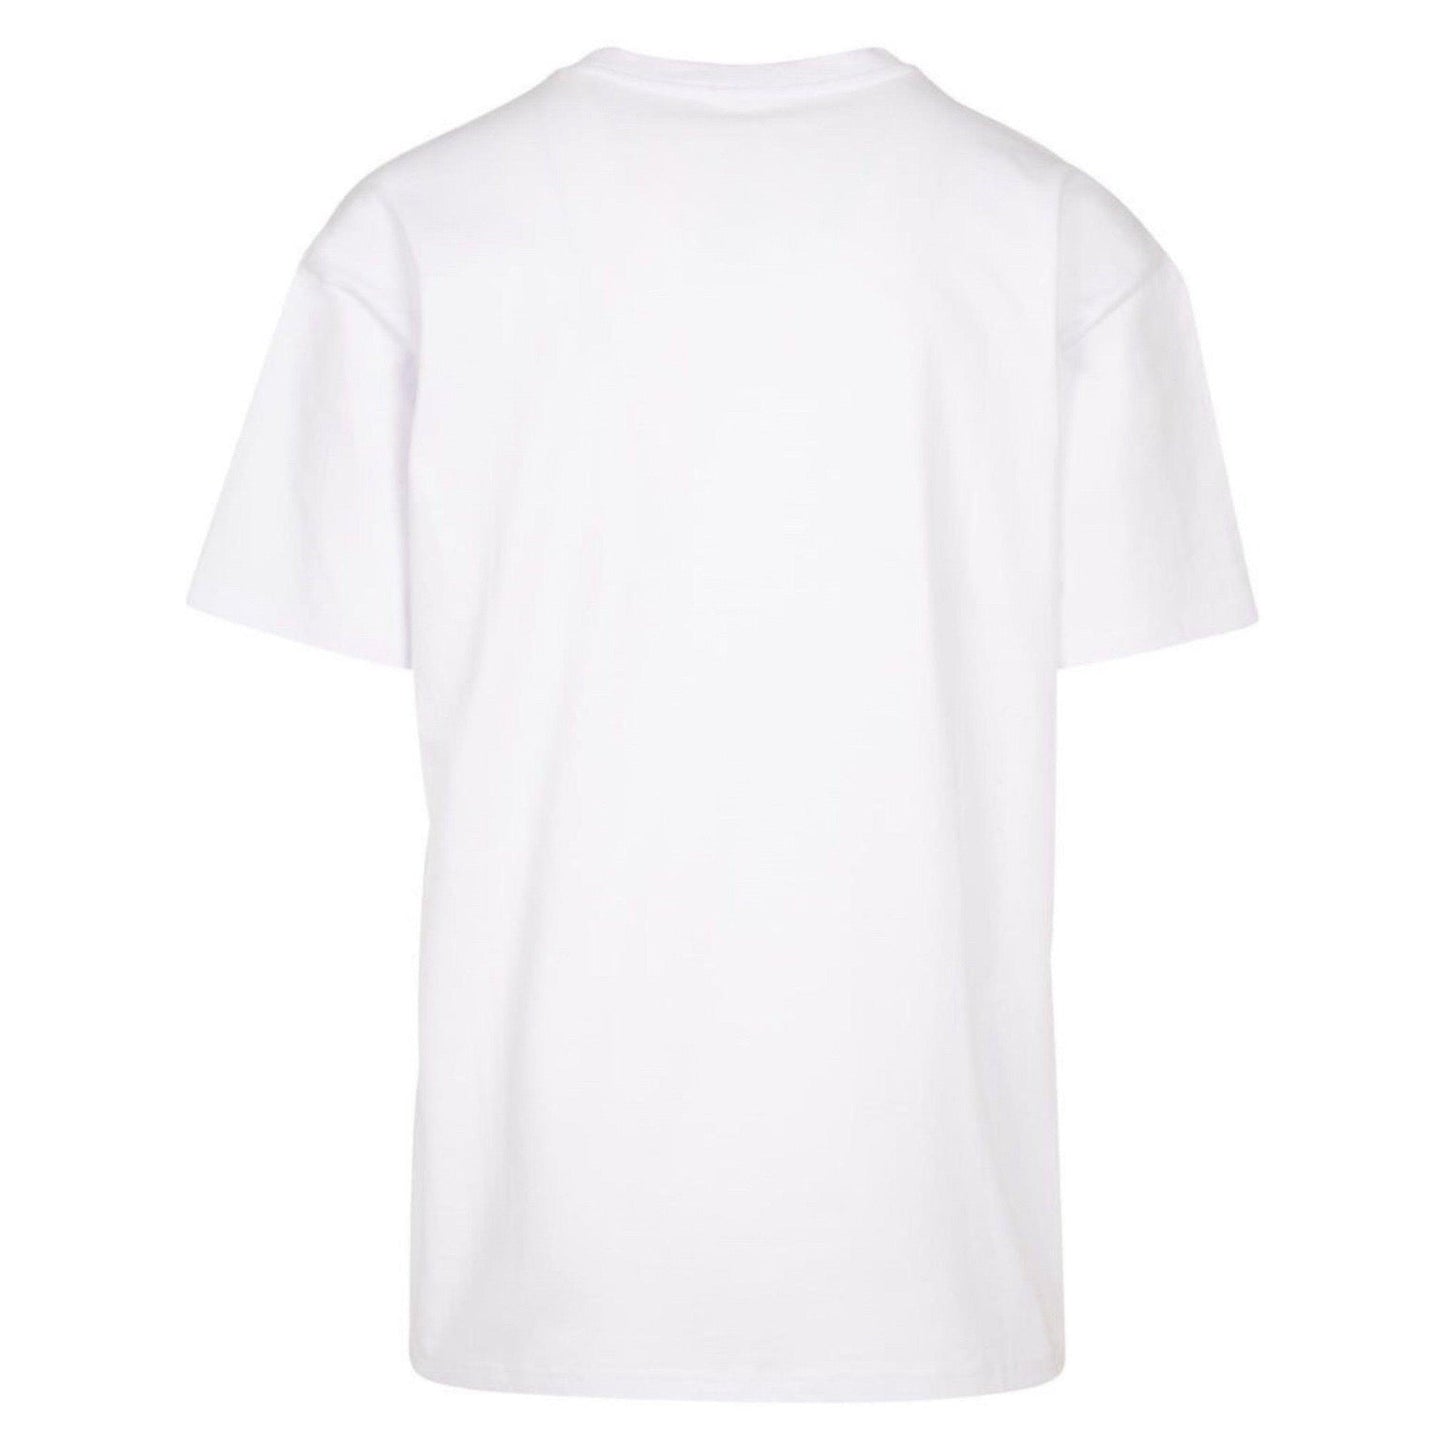 Oversize Shirt White/Black 240 g/m²